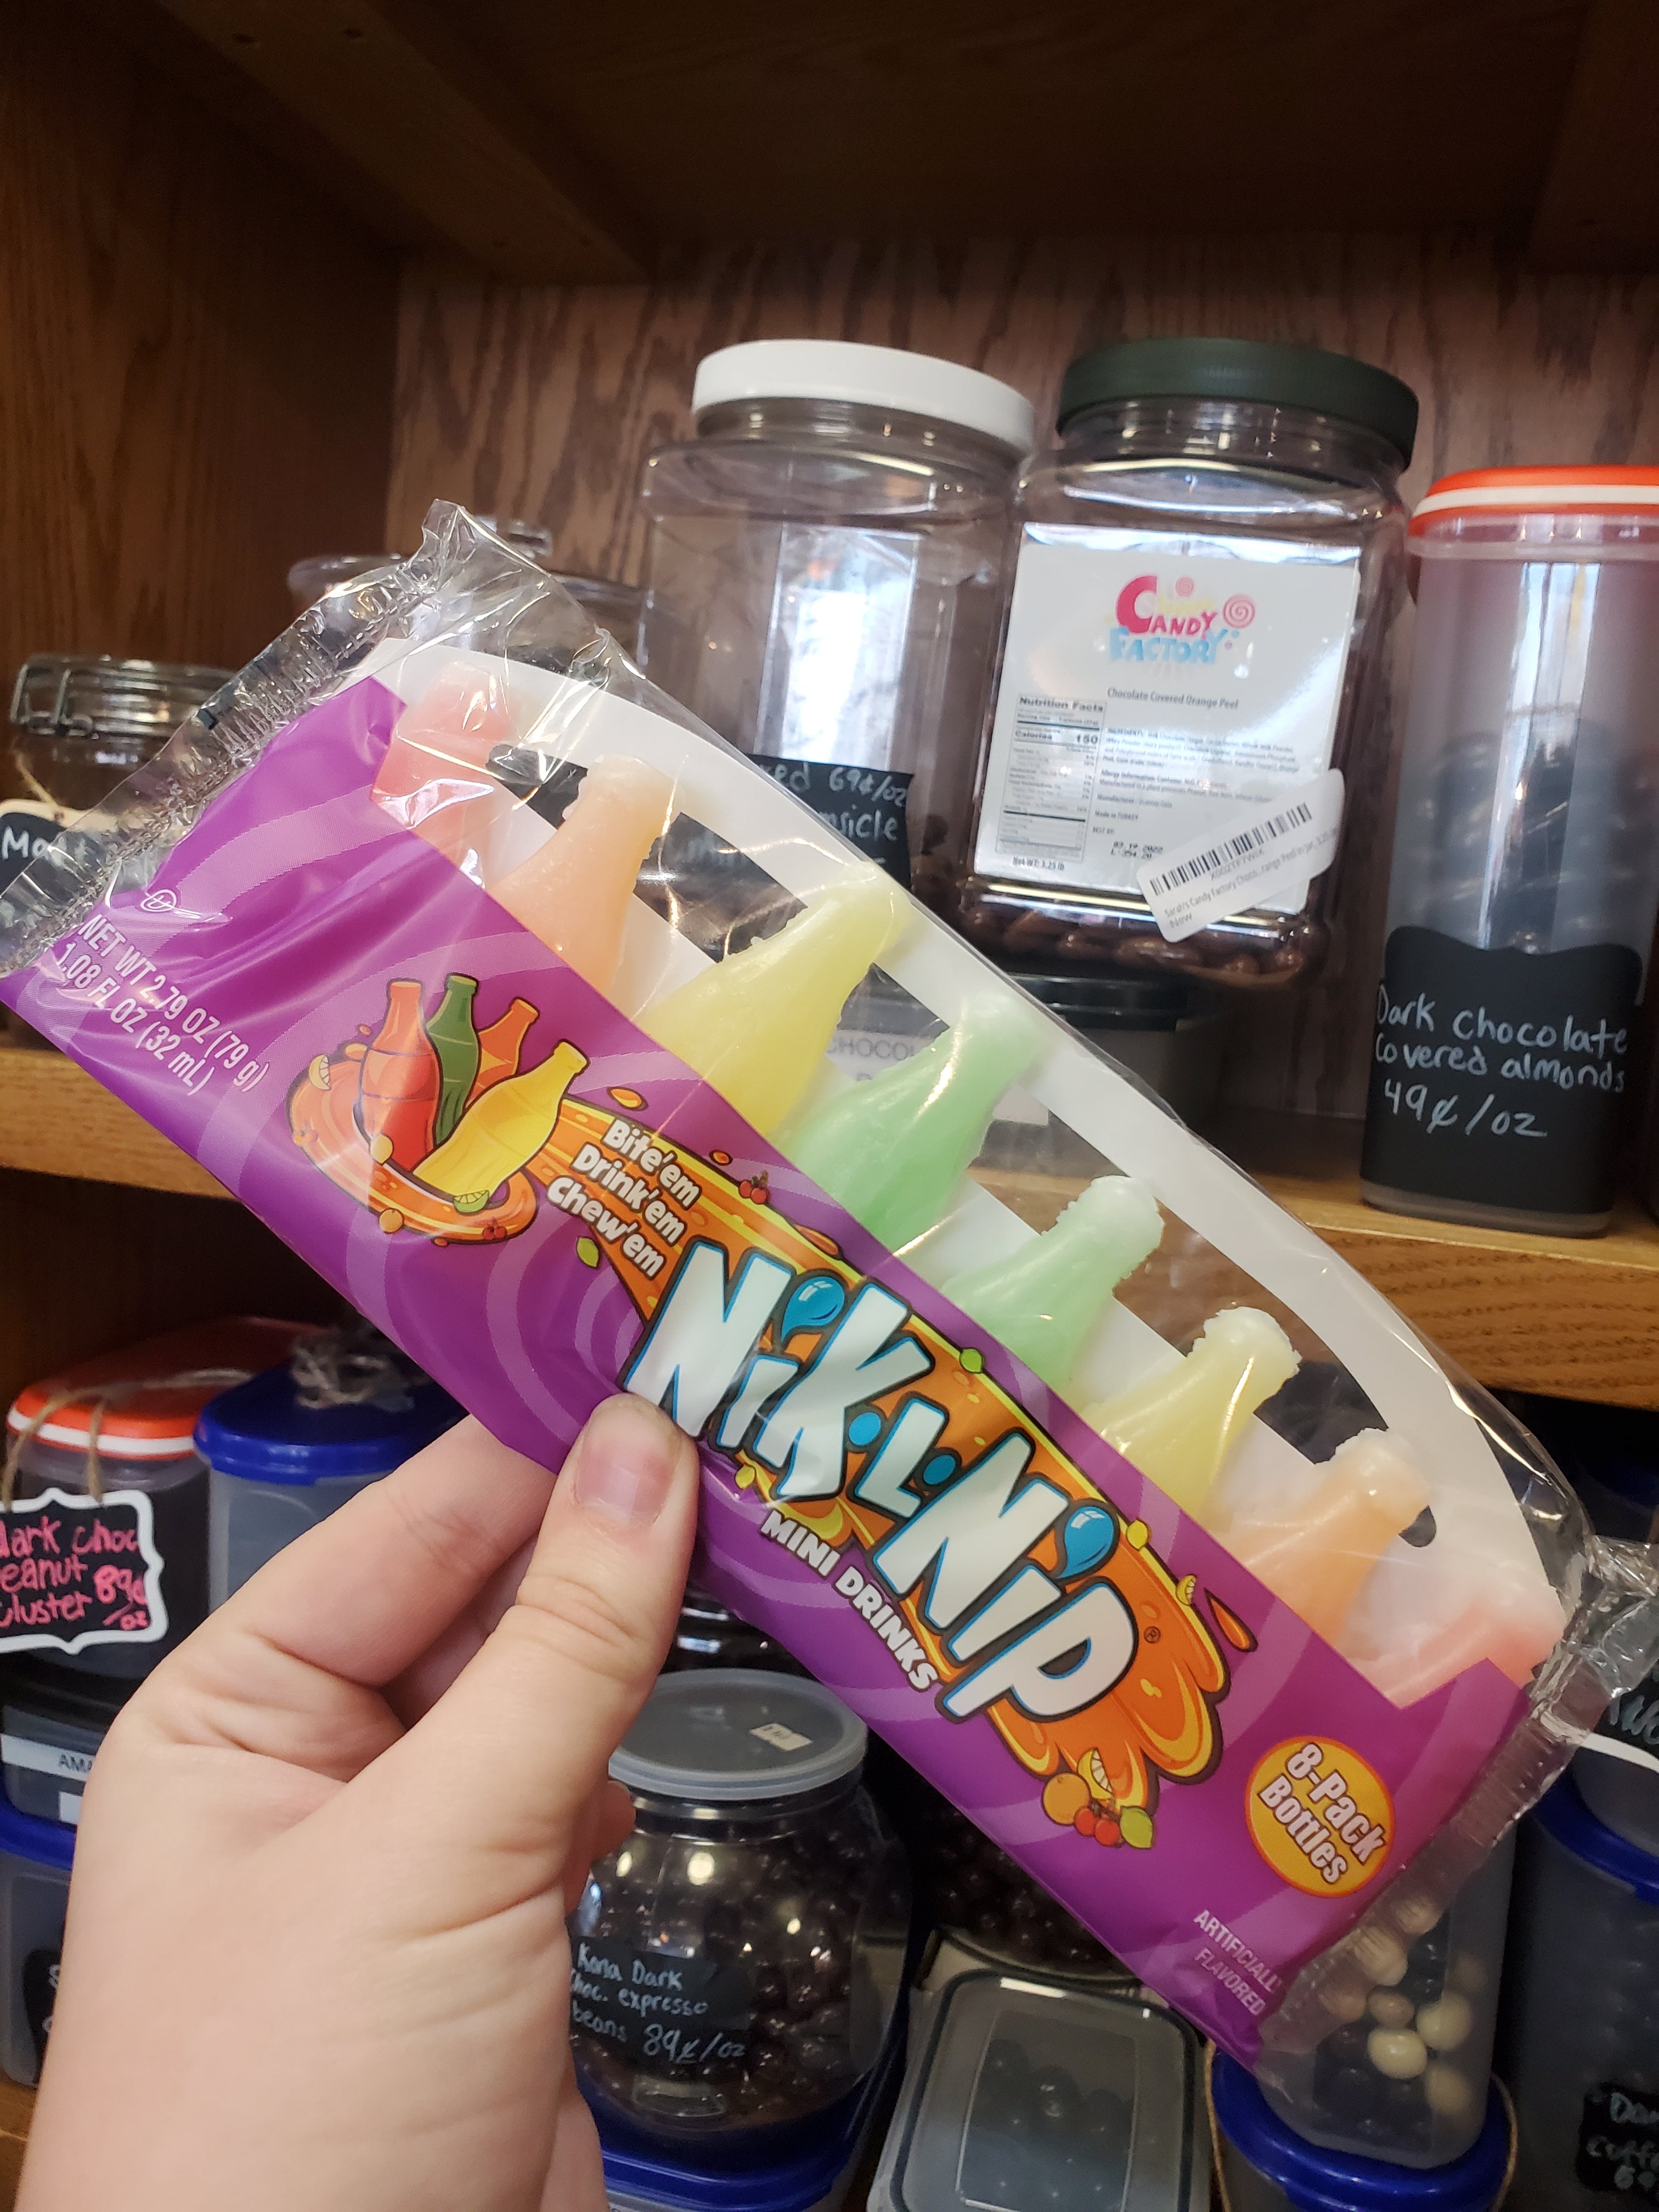 Nostalgia Candy: Wax Lips and Nik-L-Nips